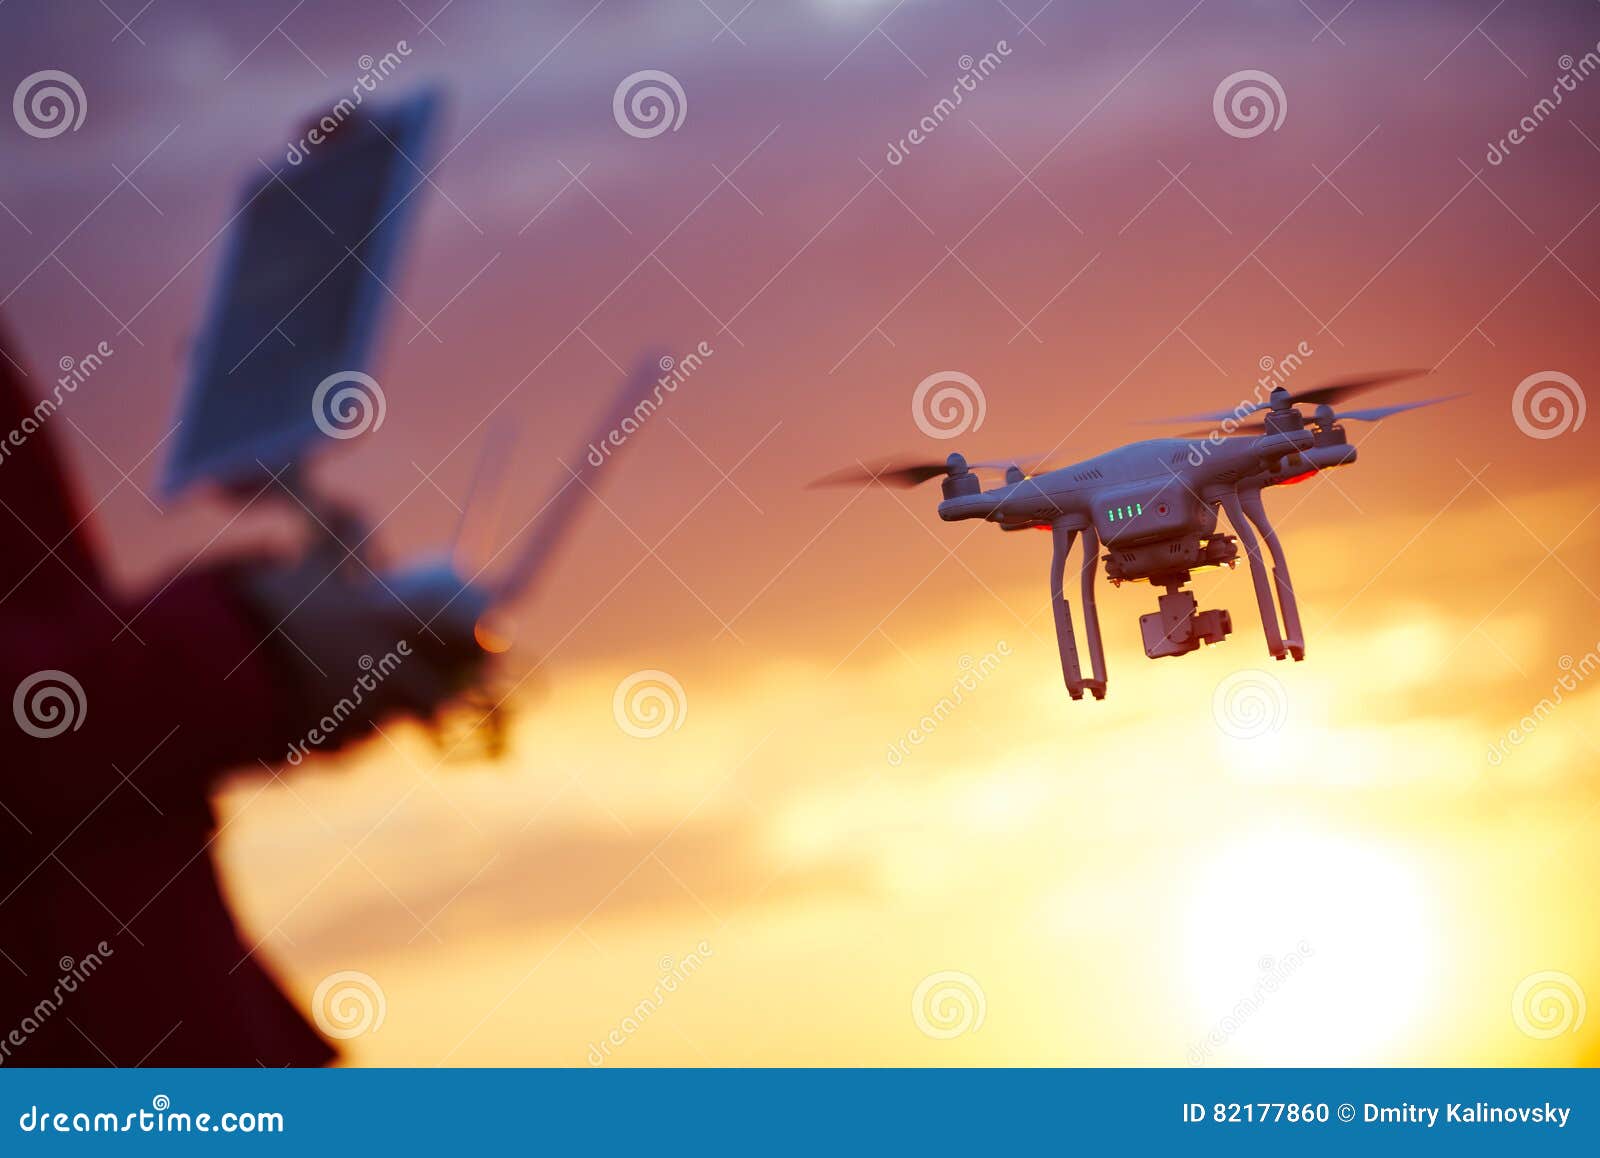 drone pilotage at sunset